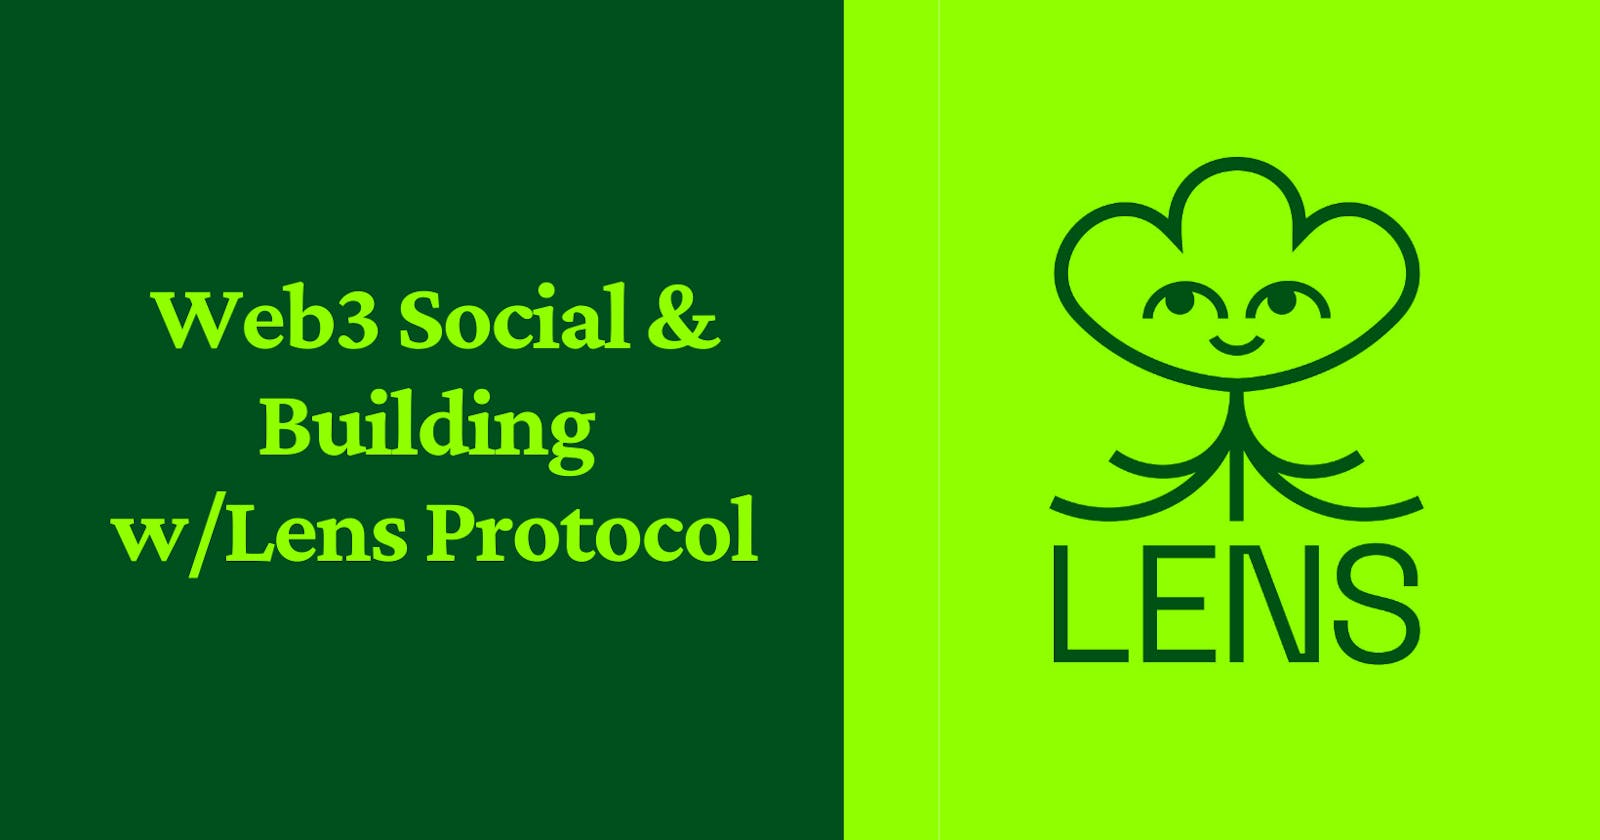 Web3 Social & Building w/Lens Protocol